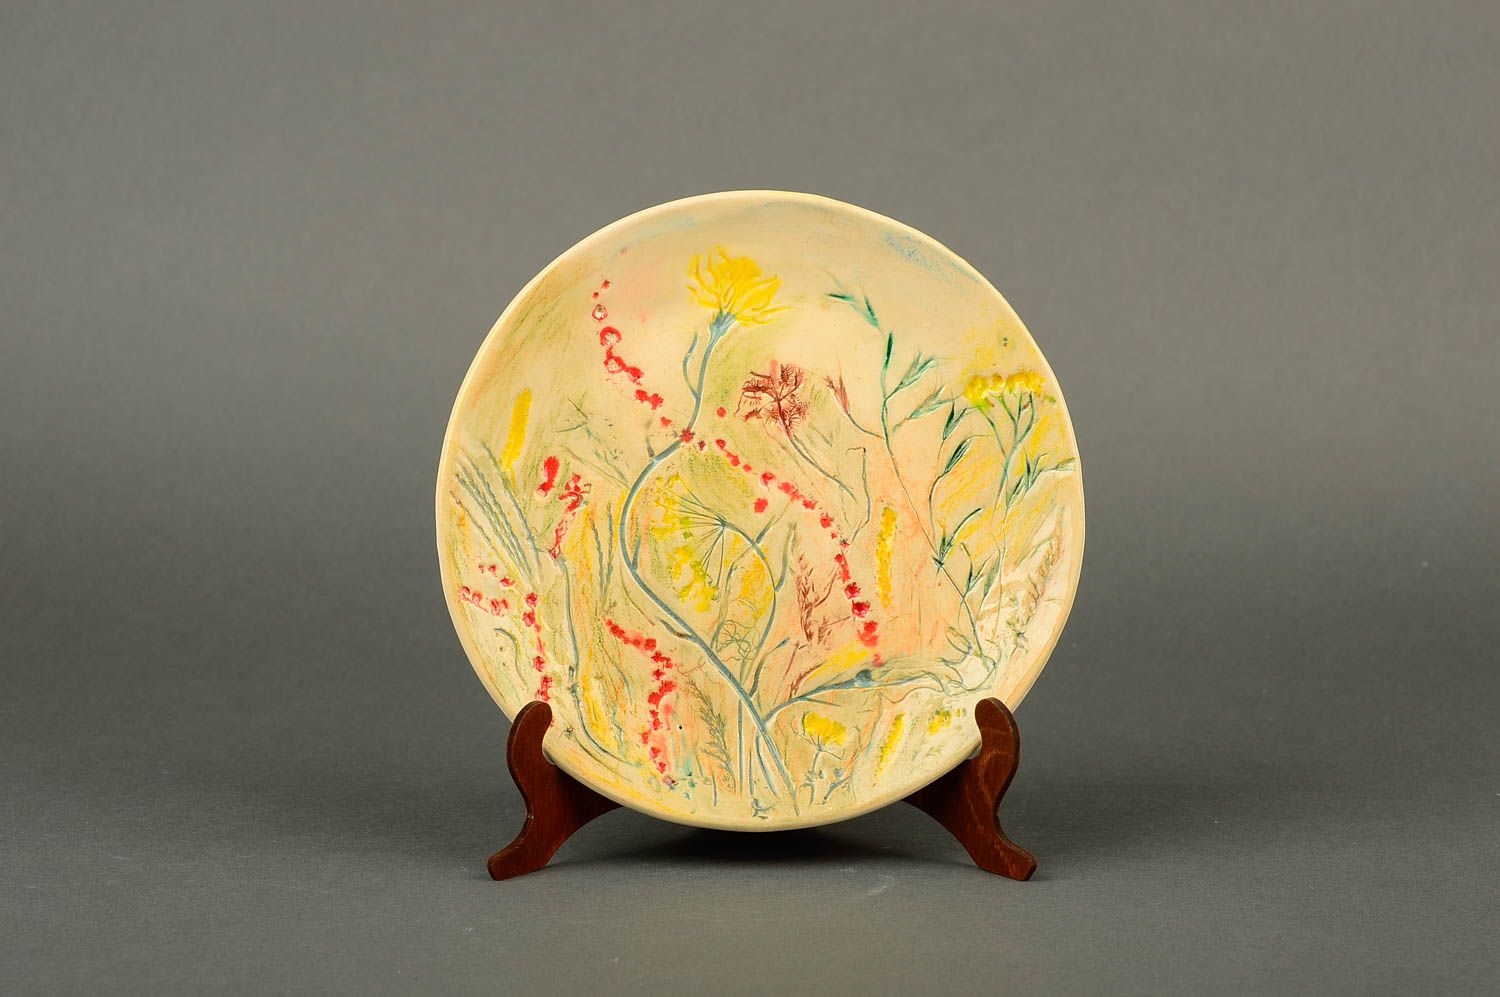 Beautiful handmade ceramic plate table decor ideas ceramic kitchenware ideas photo 1